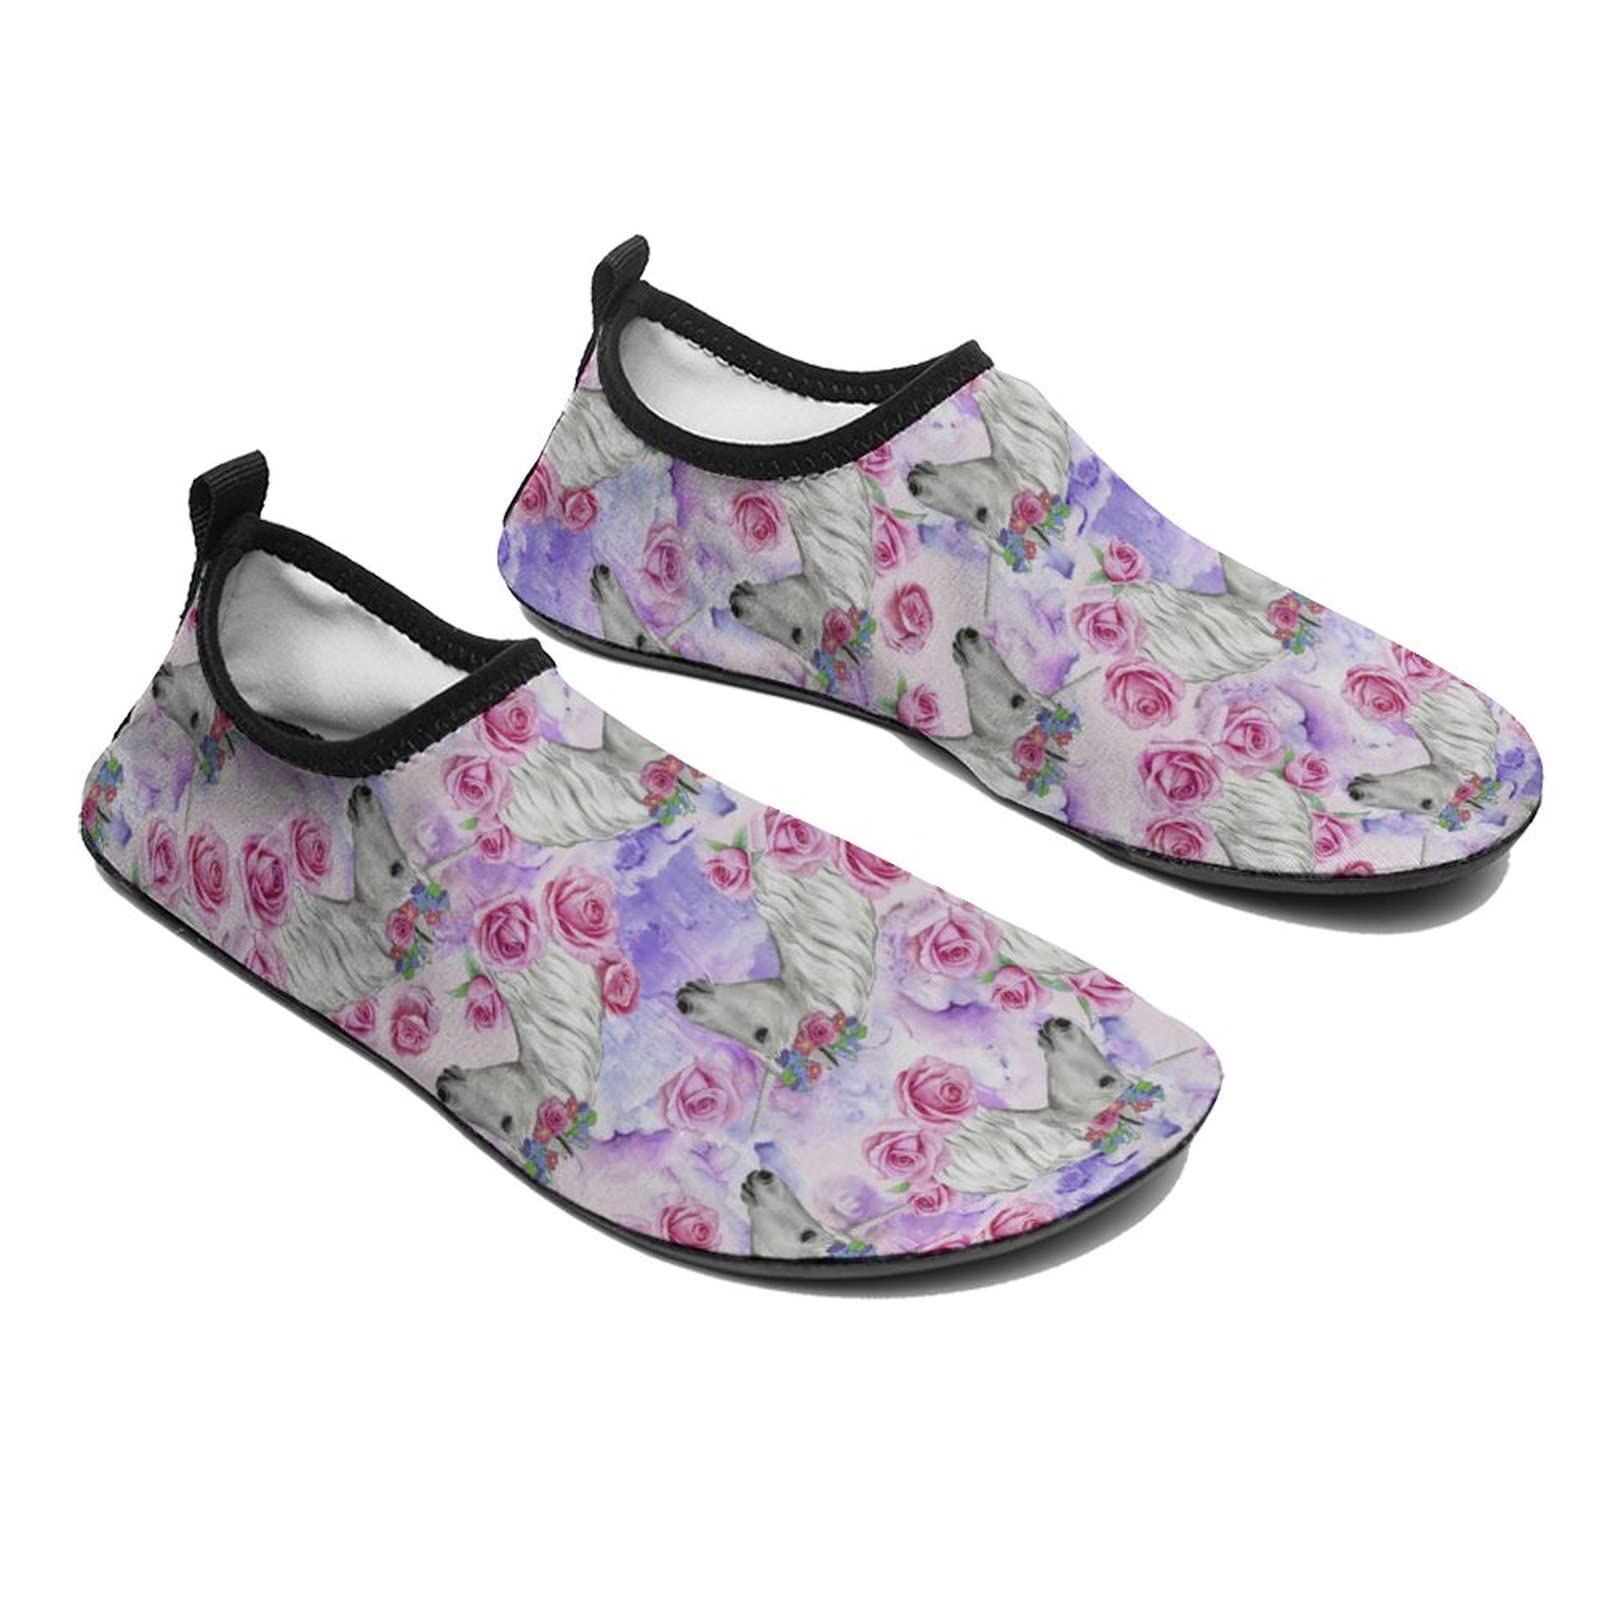 Water Shoes Unicorn Pink Roses Yoga Socks Beach Swim Surf Sports Shoes for Women Men 9/10women,7/8men